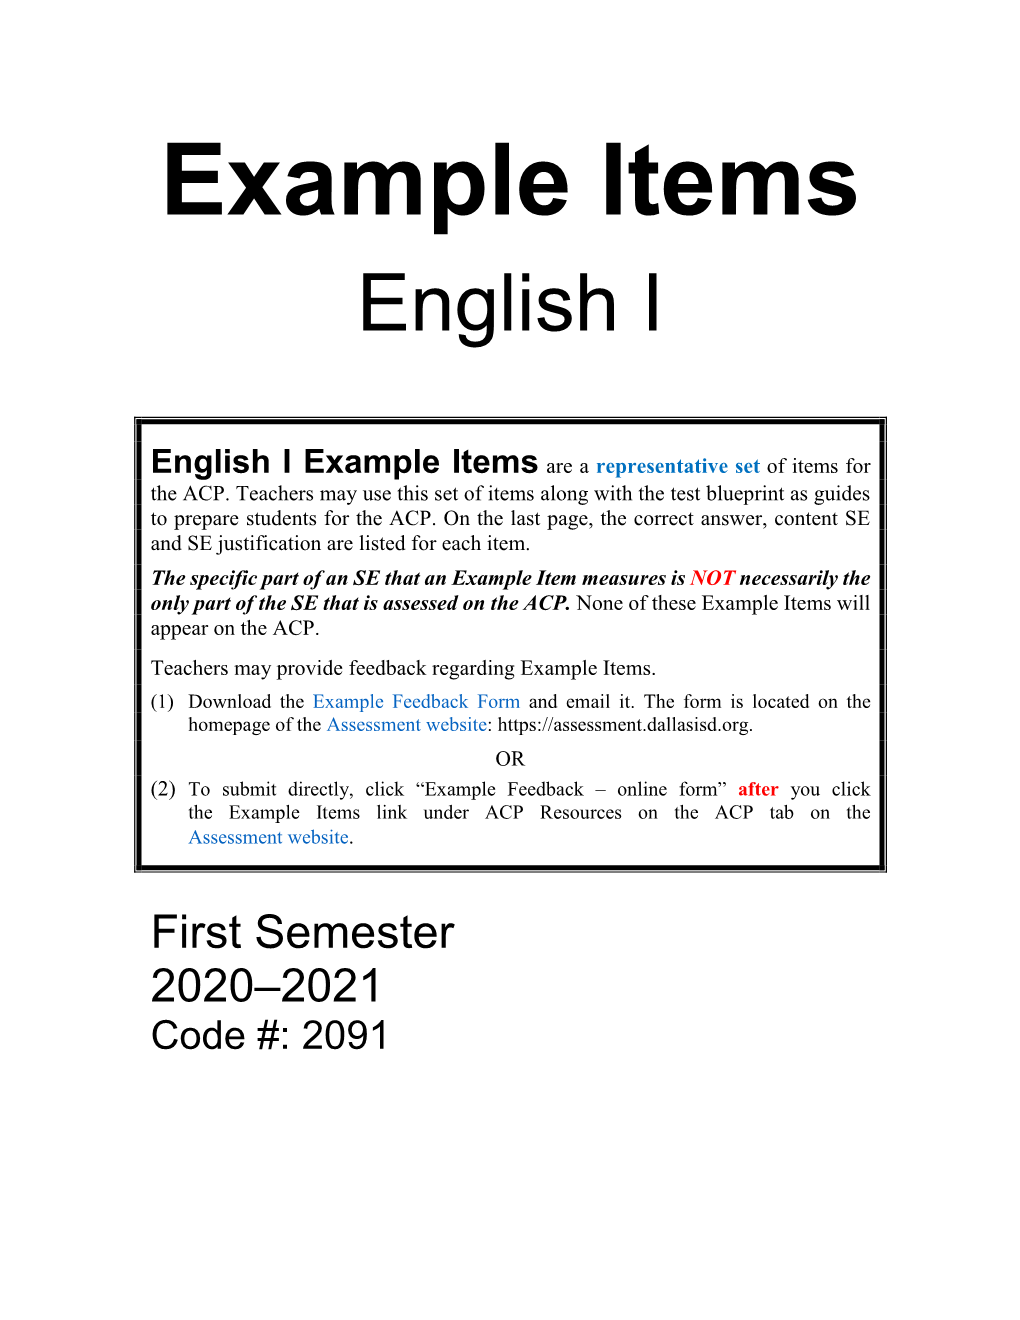 Example Items English I